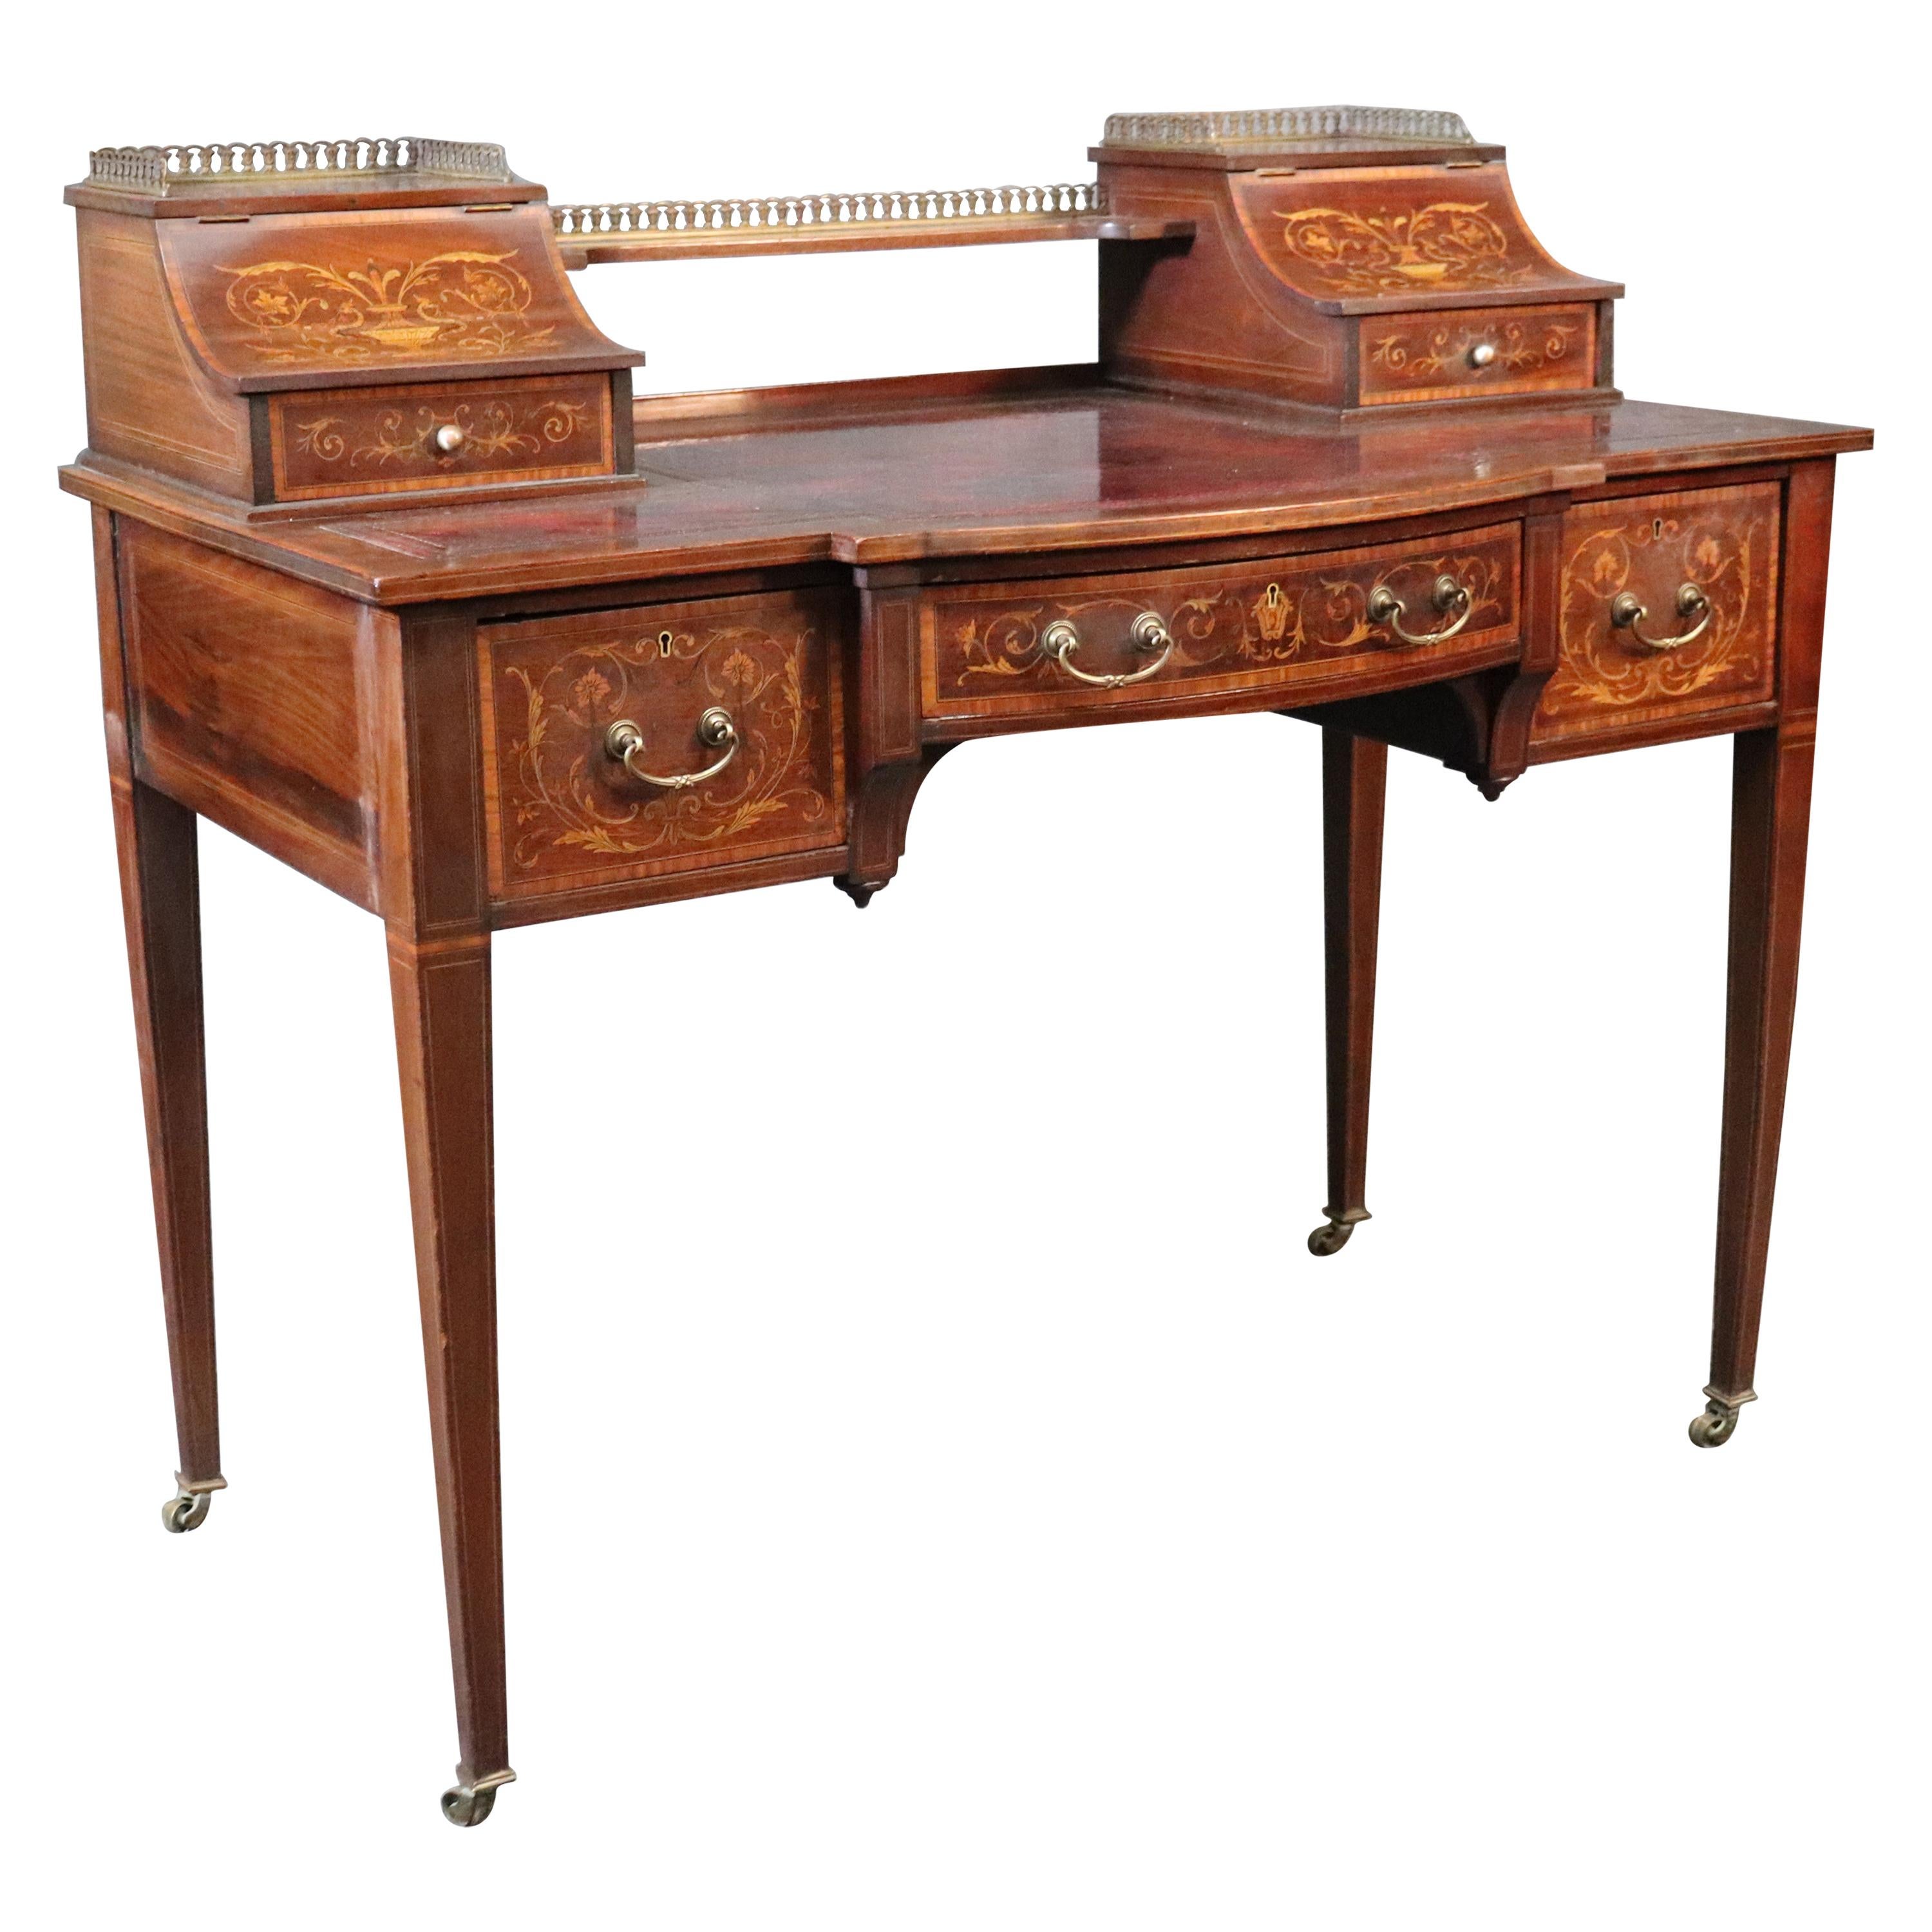 English Inlaid Edwardian Burgundy Leather Writing Table Desk, circa 1920